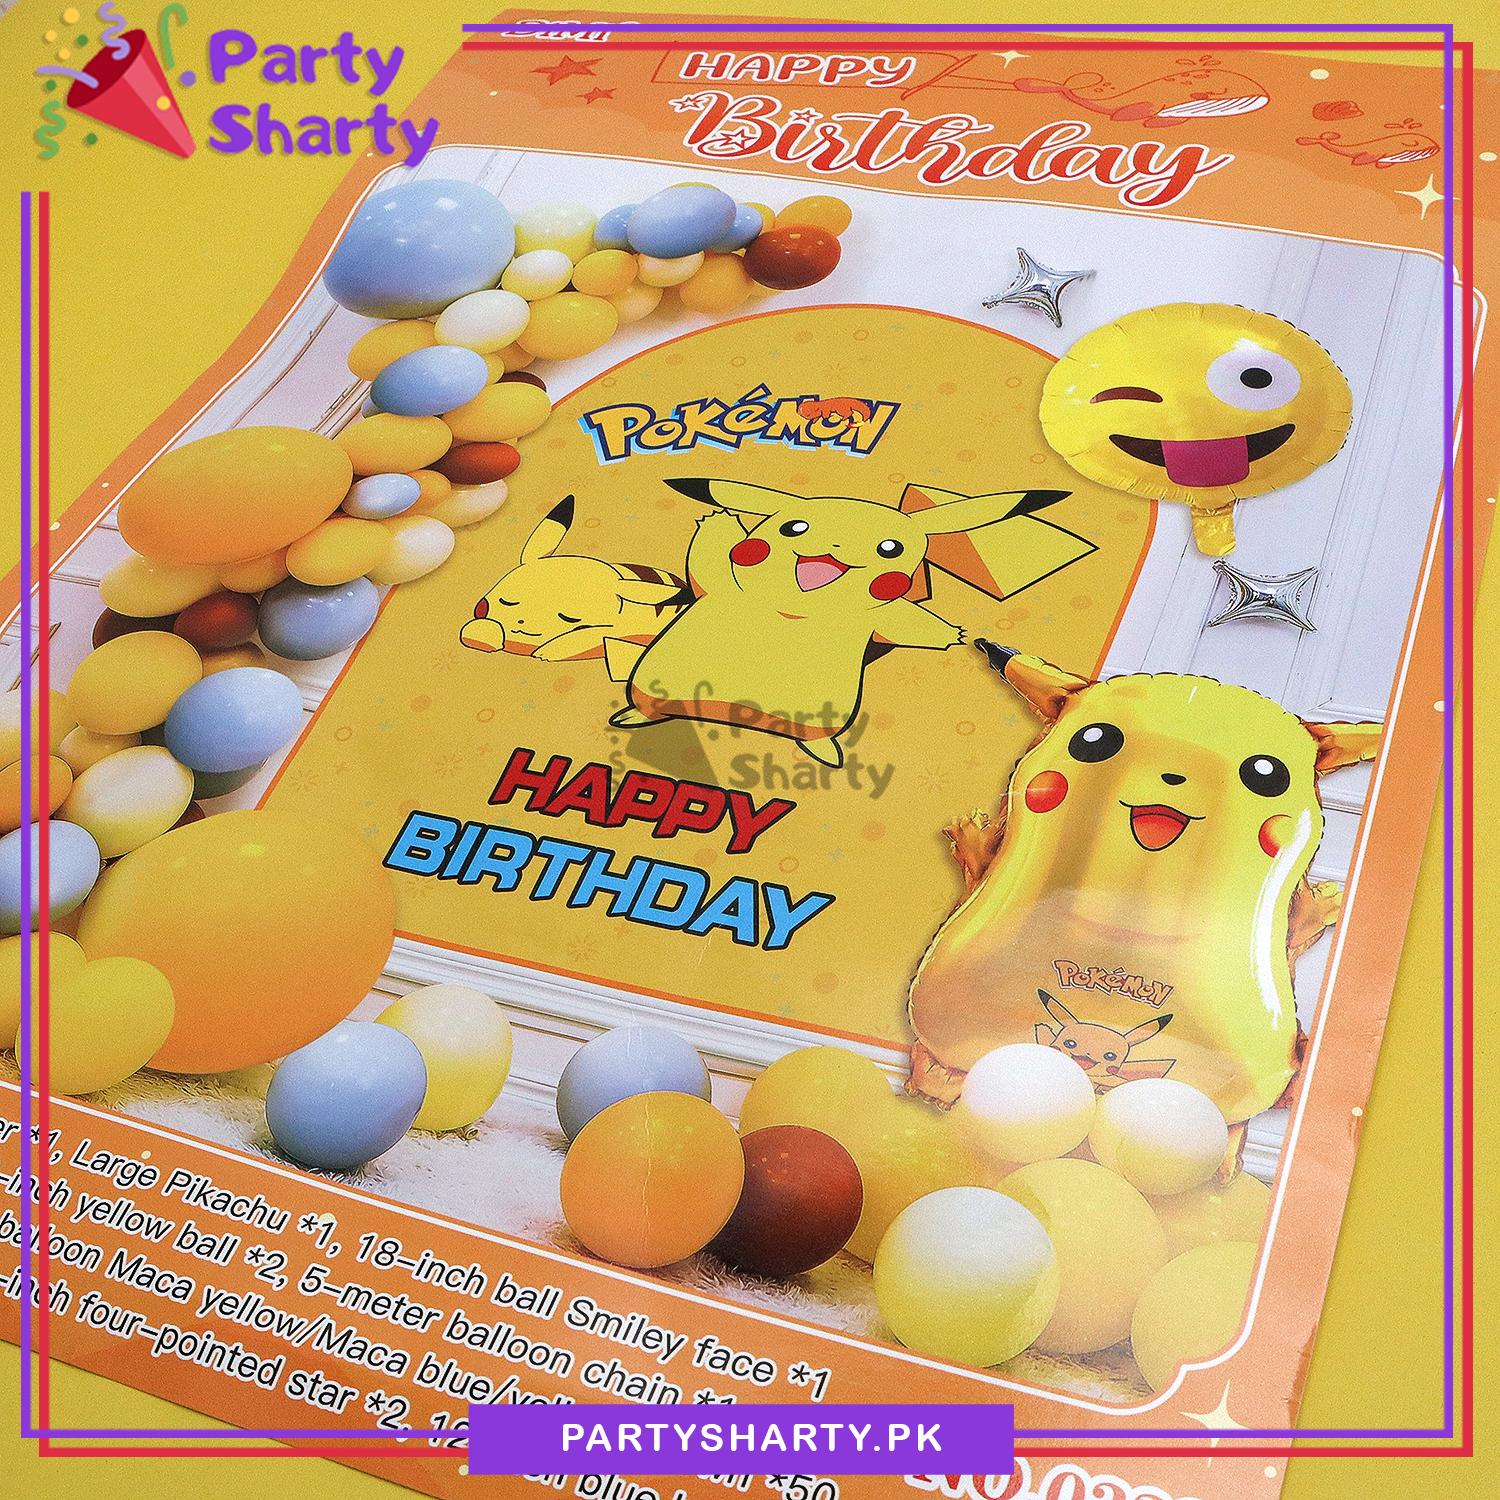 Happy Birthday Pokemon Theme Set for Theme Based Birthday Decoration and Celebration